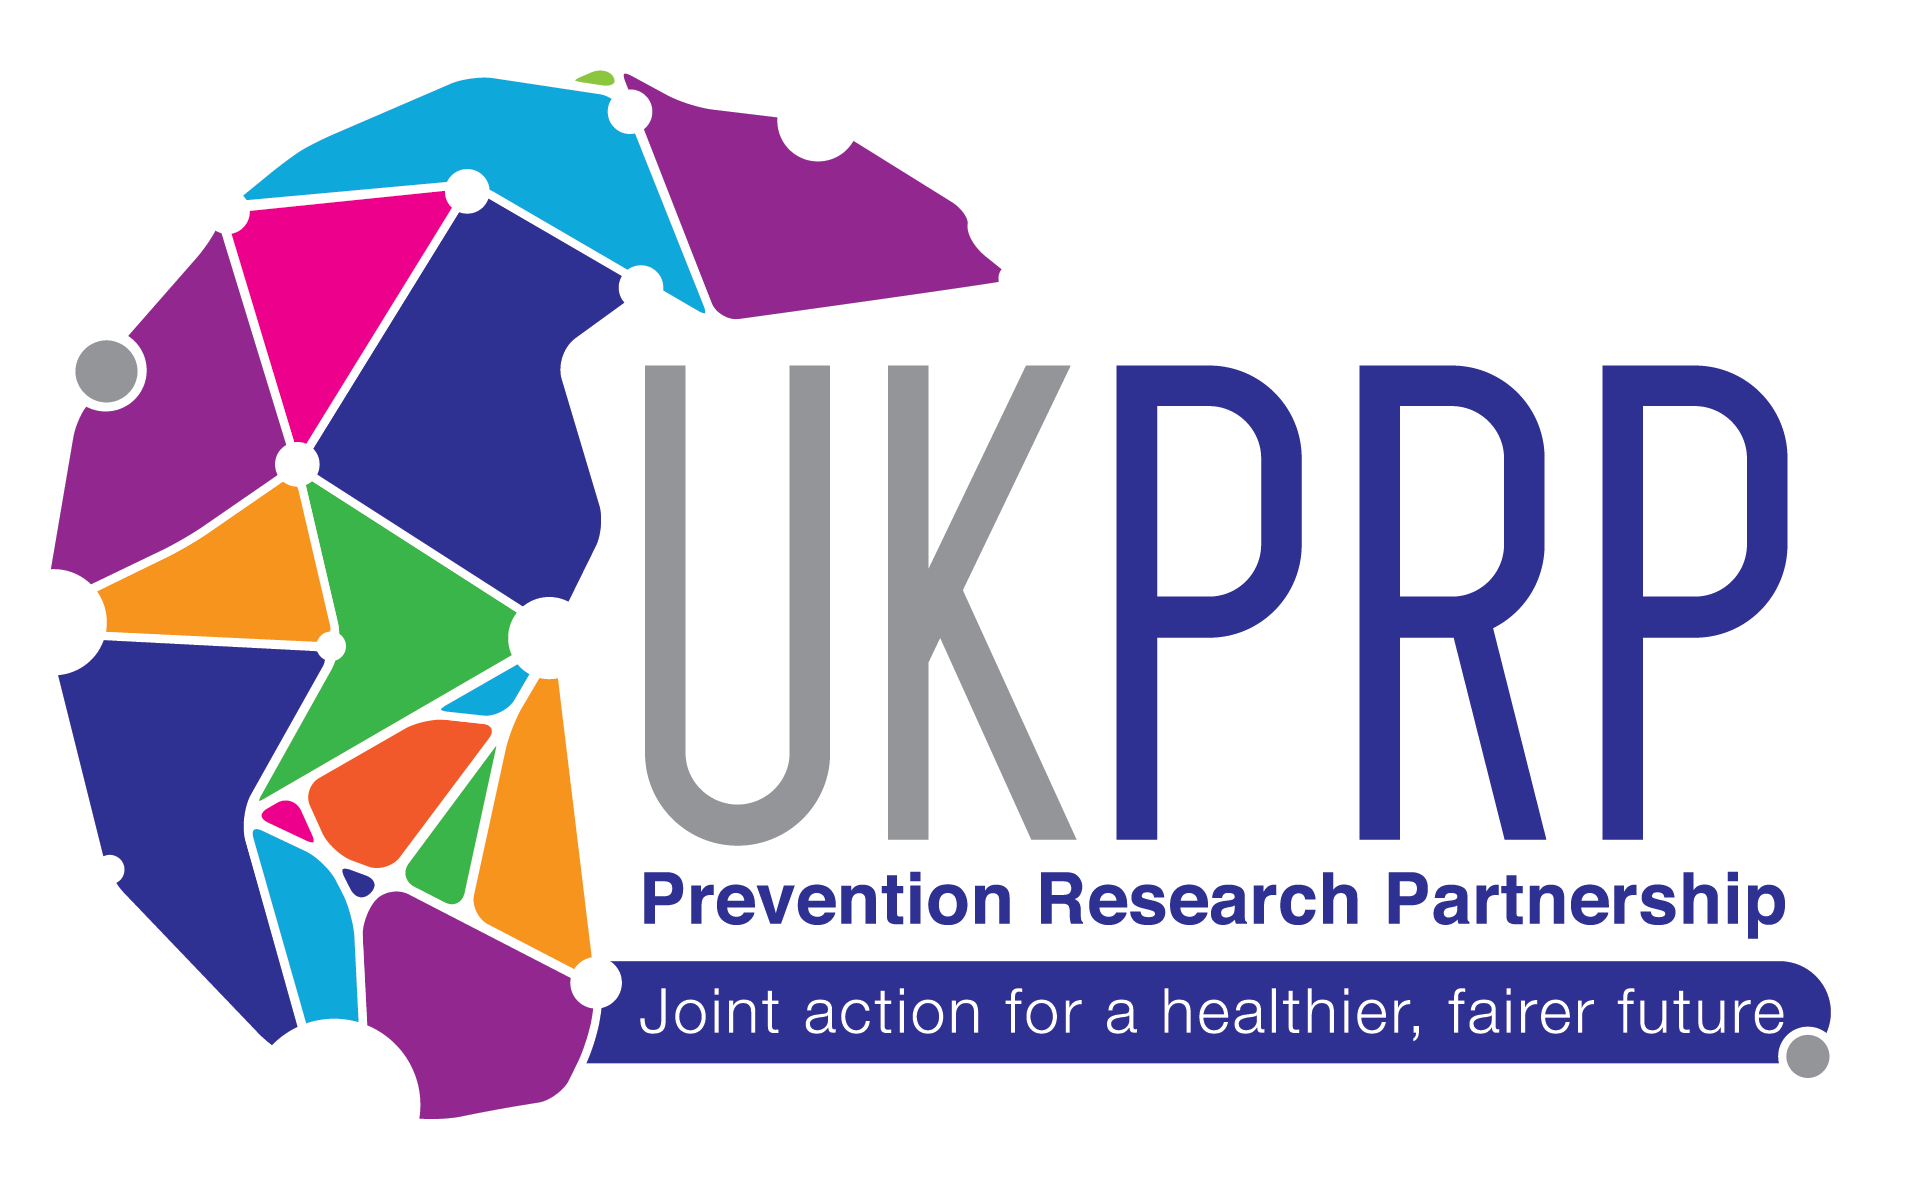 UKPRP logo